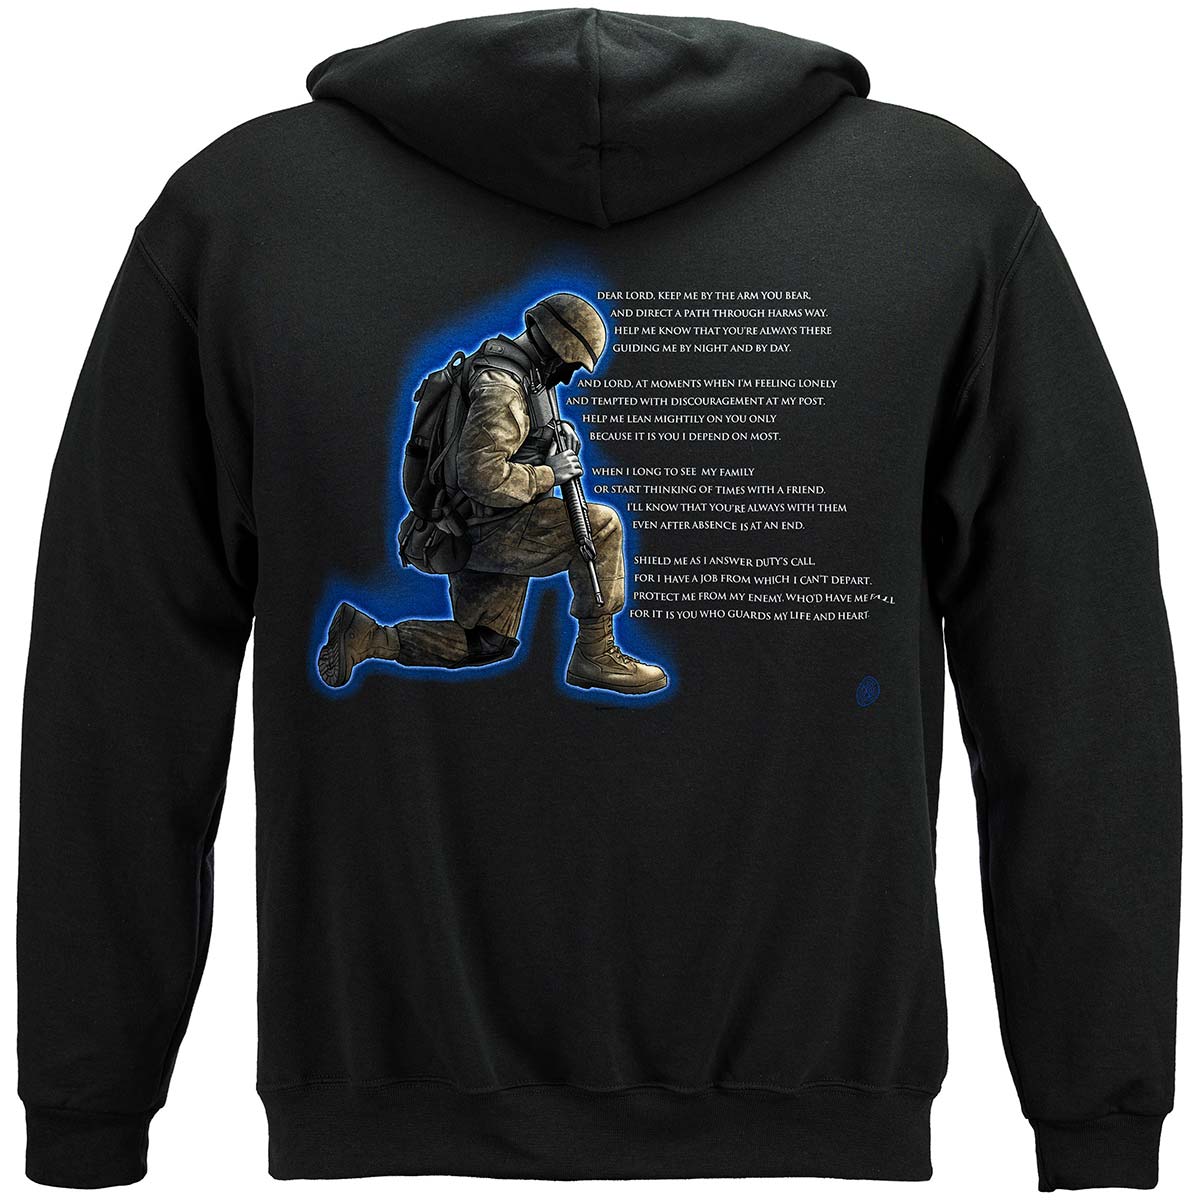 Soldiers Prayer Premium T-Shirt